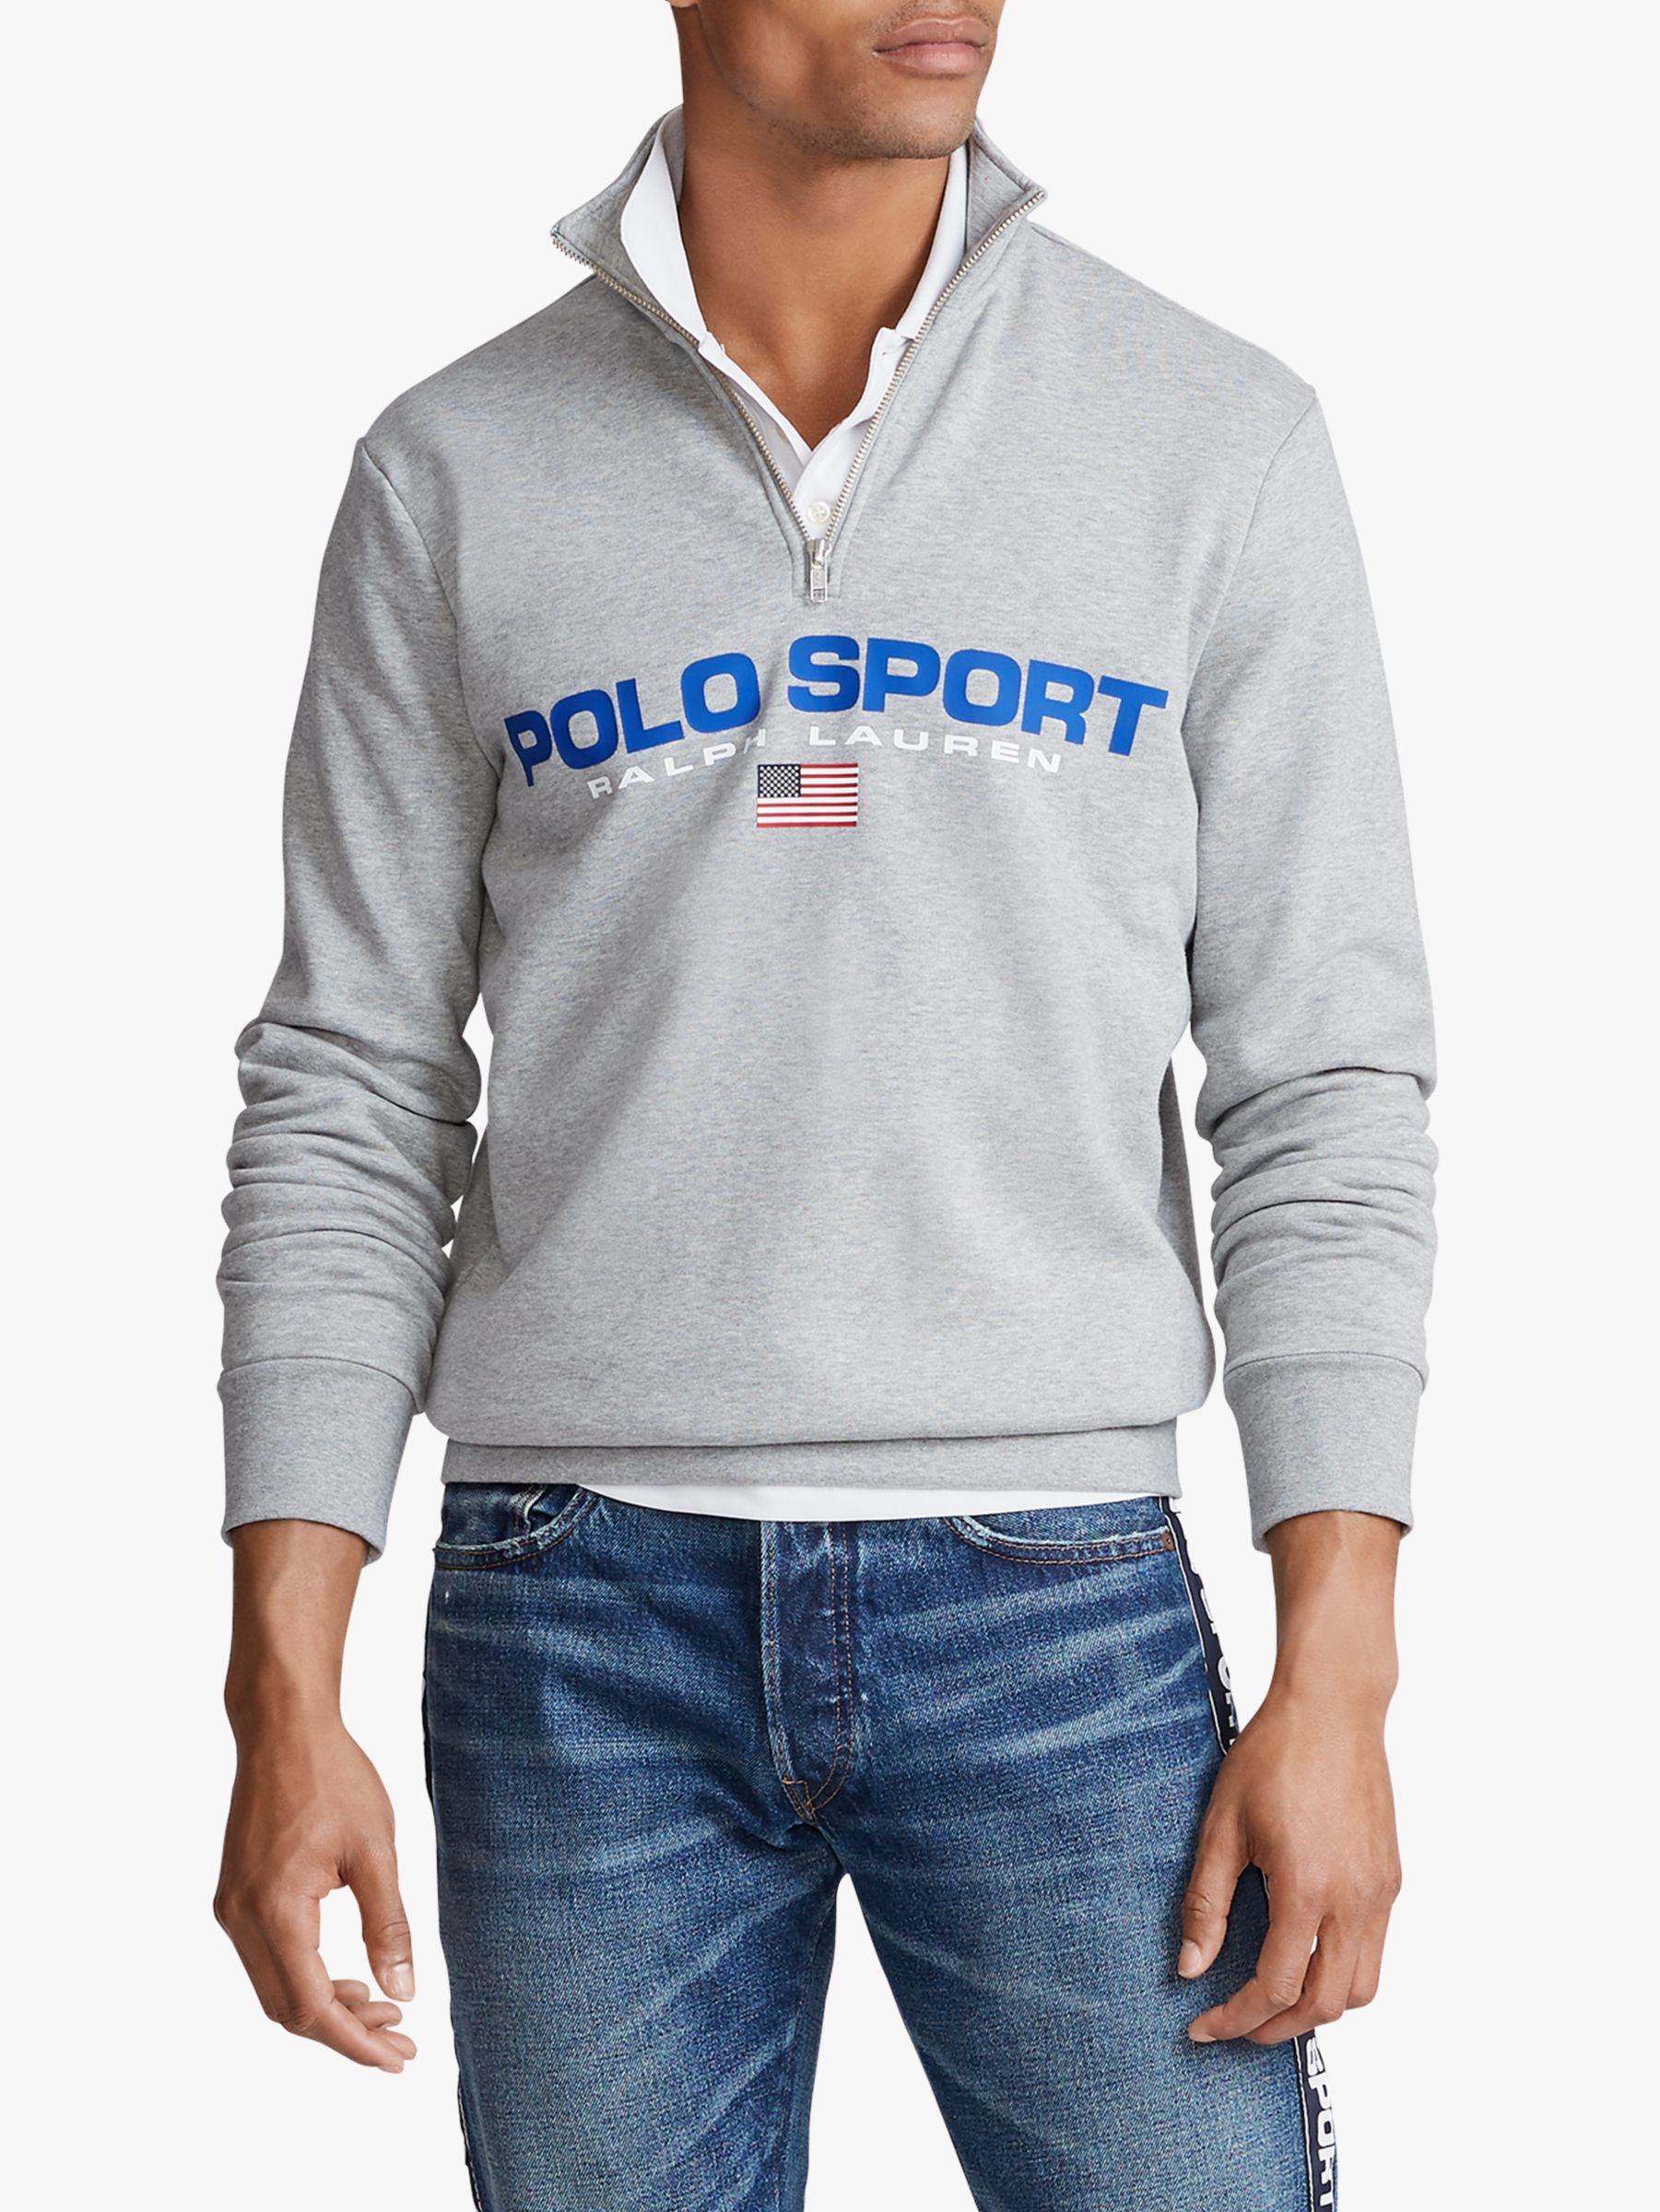 polo sport online